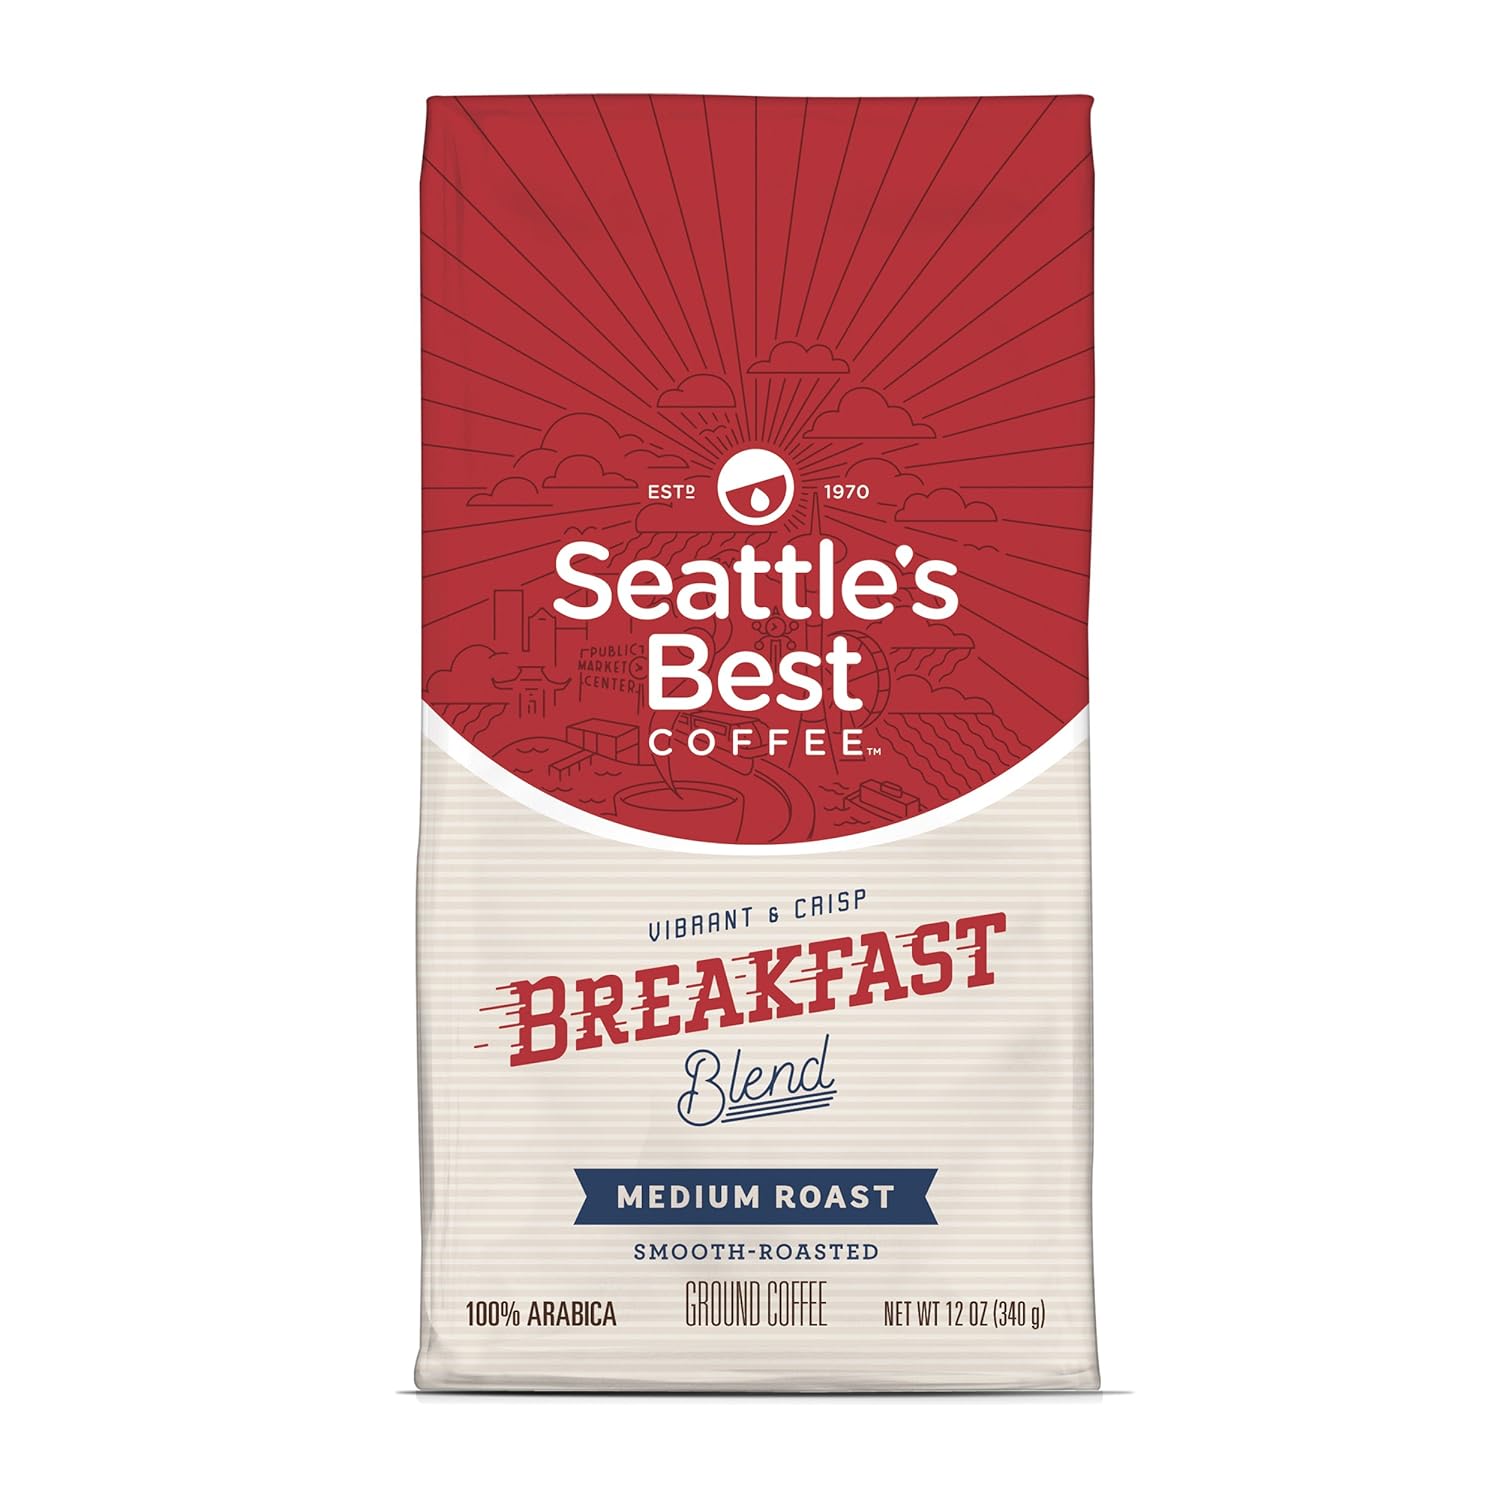 Seattle's Best Coffee Breakfast Blend Medium Roast Ground Coffee, 12-Ounce Bag